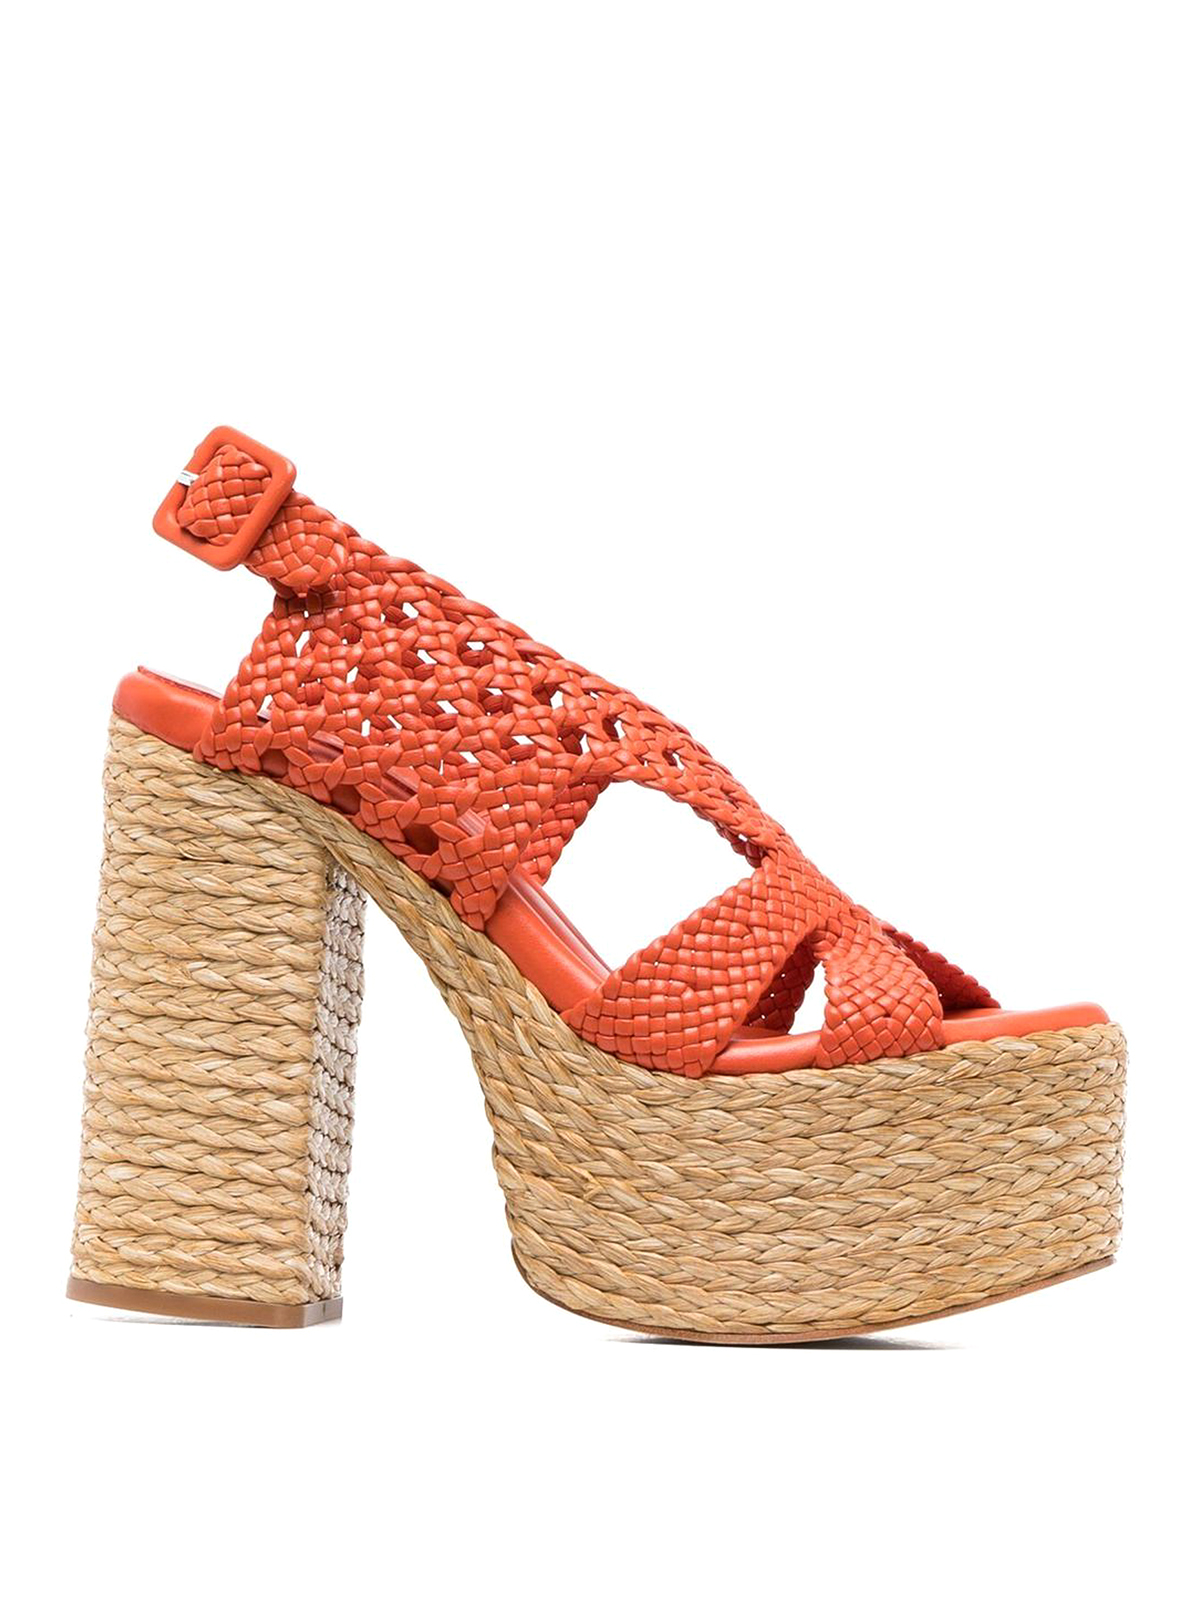 Paloma Barceló Interwovened Design Sandals With Block Heel In Orange